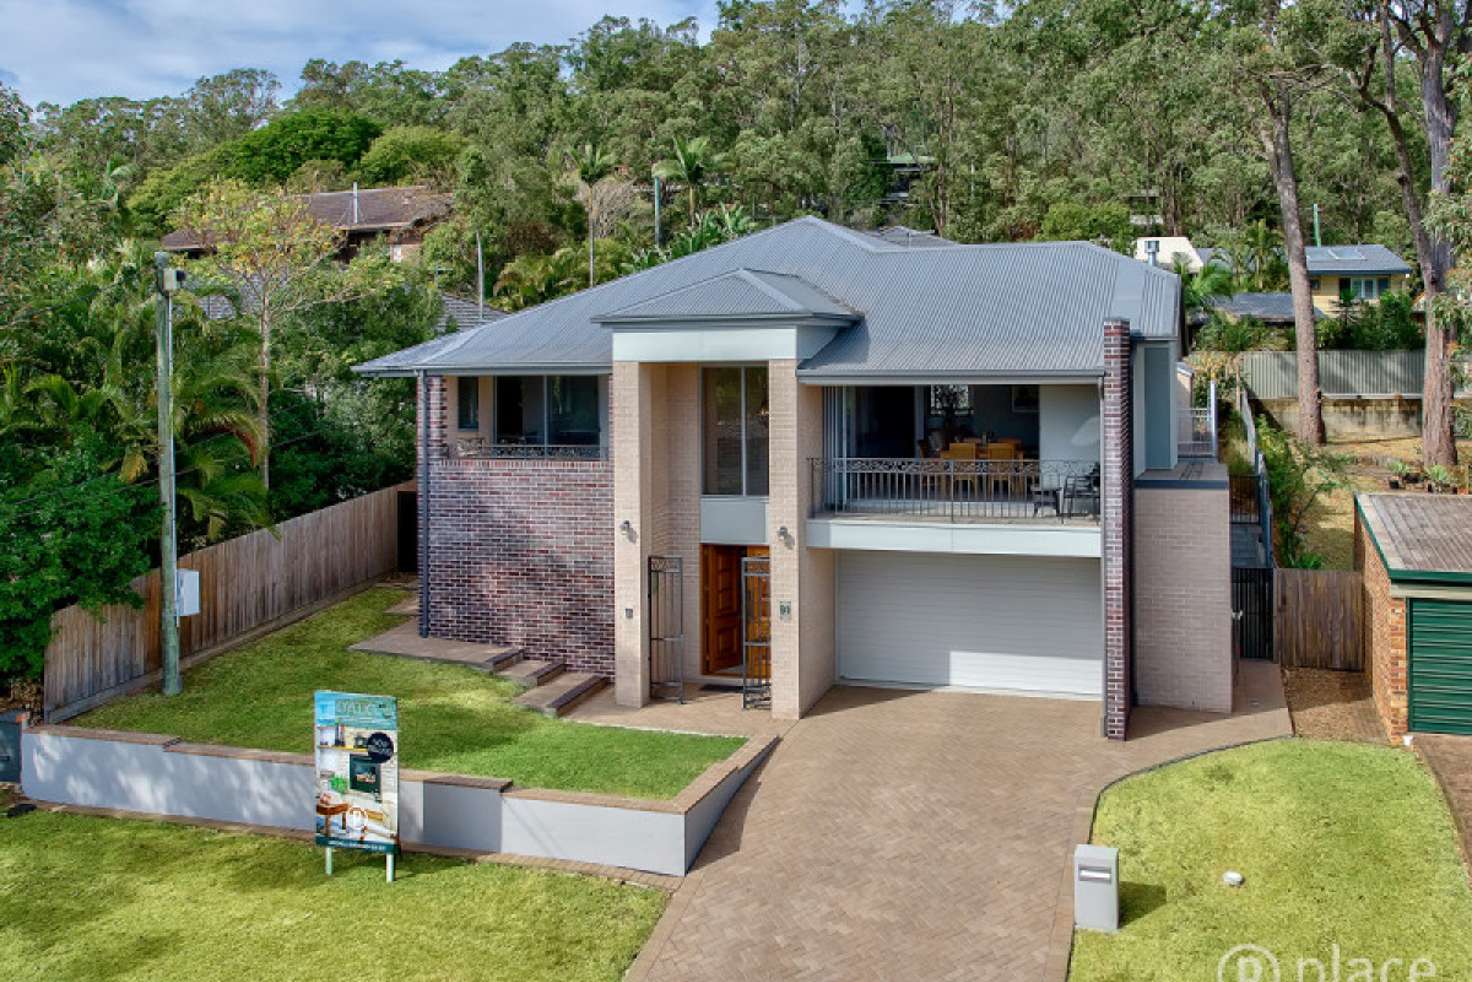 Main view of Homely house listing, 91 Monash Road, Tarragindi QLD 4121